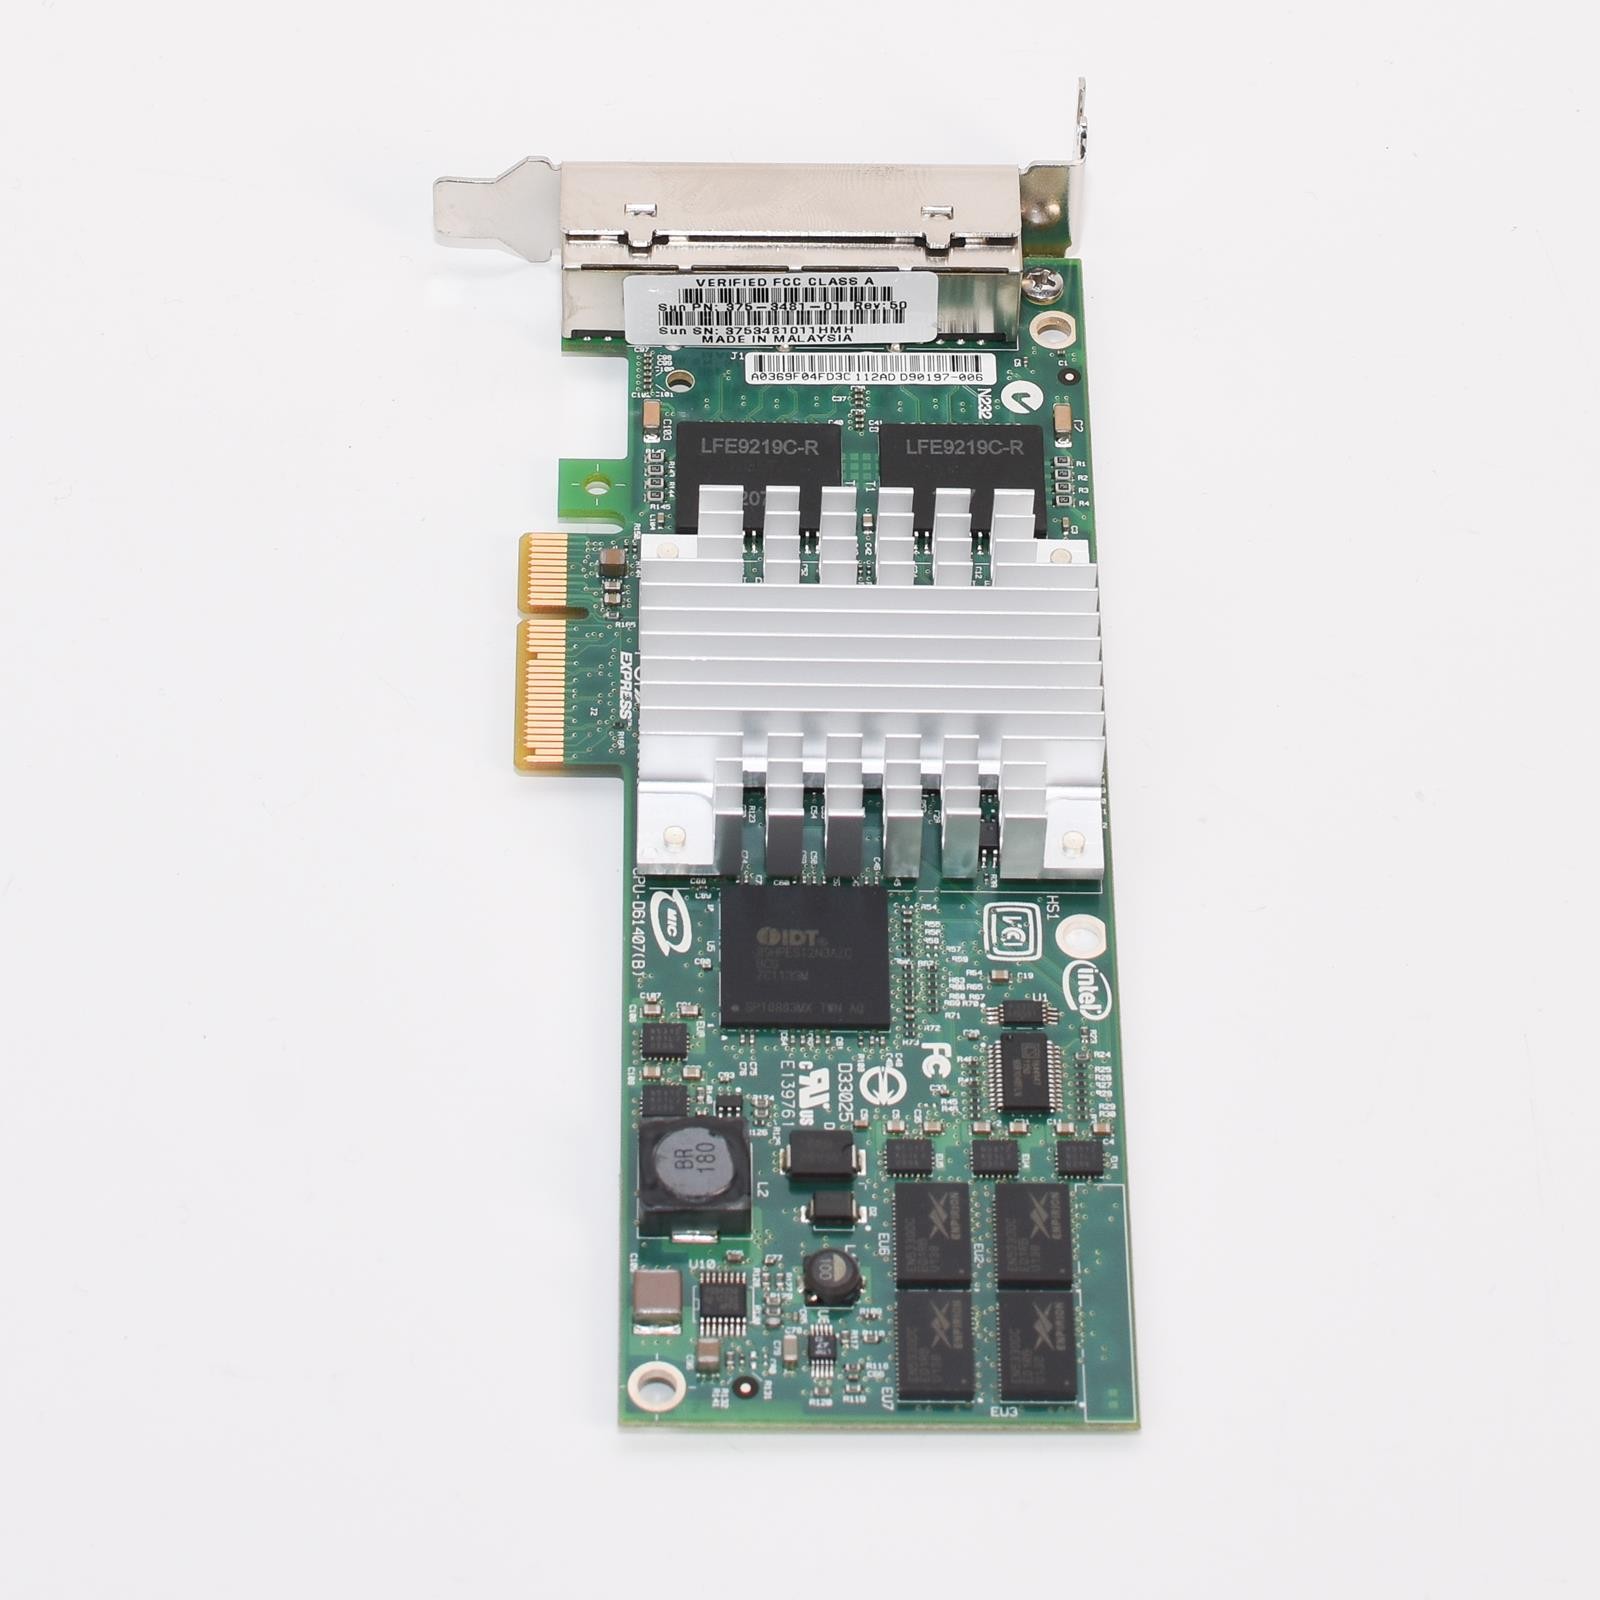 Sun 375-3481-01 X4446A-Z PCIe Quad Port Gigabit Ethernet Adapter NIC